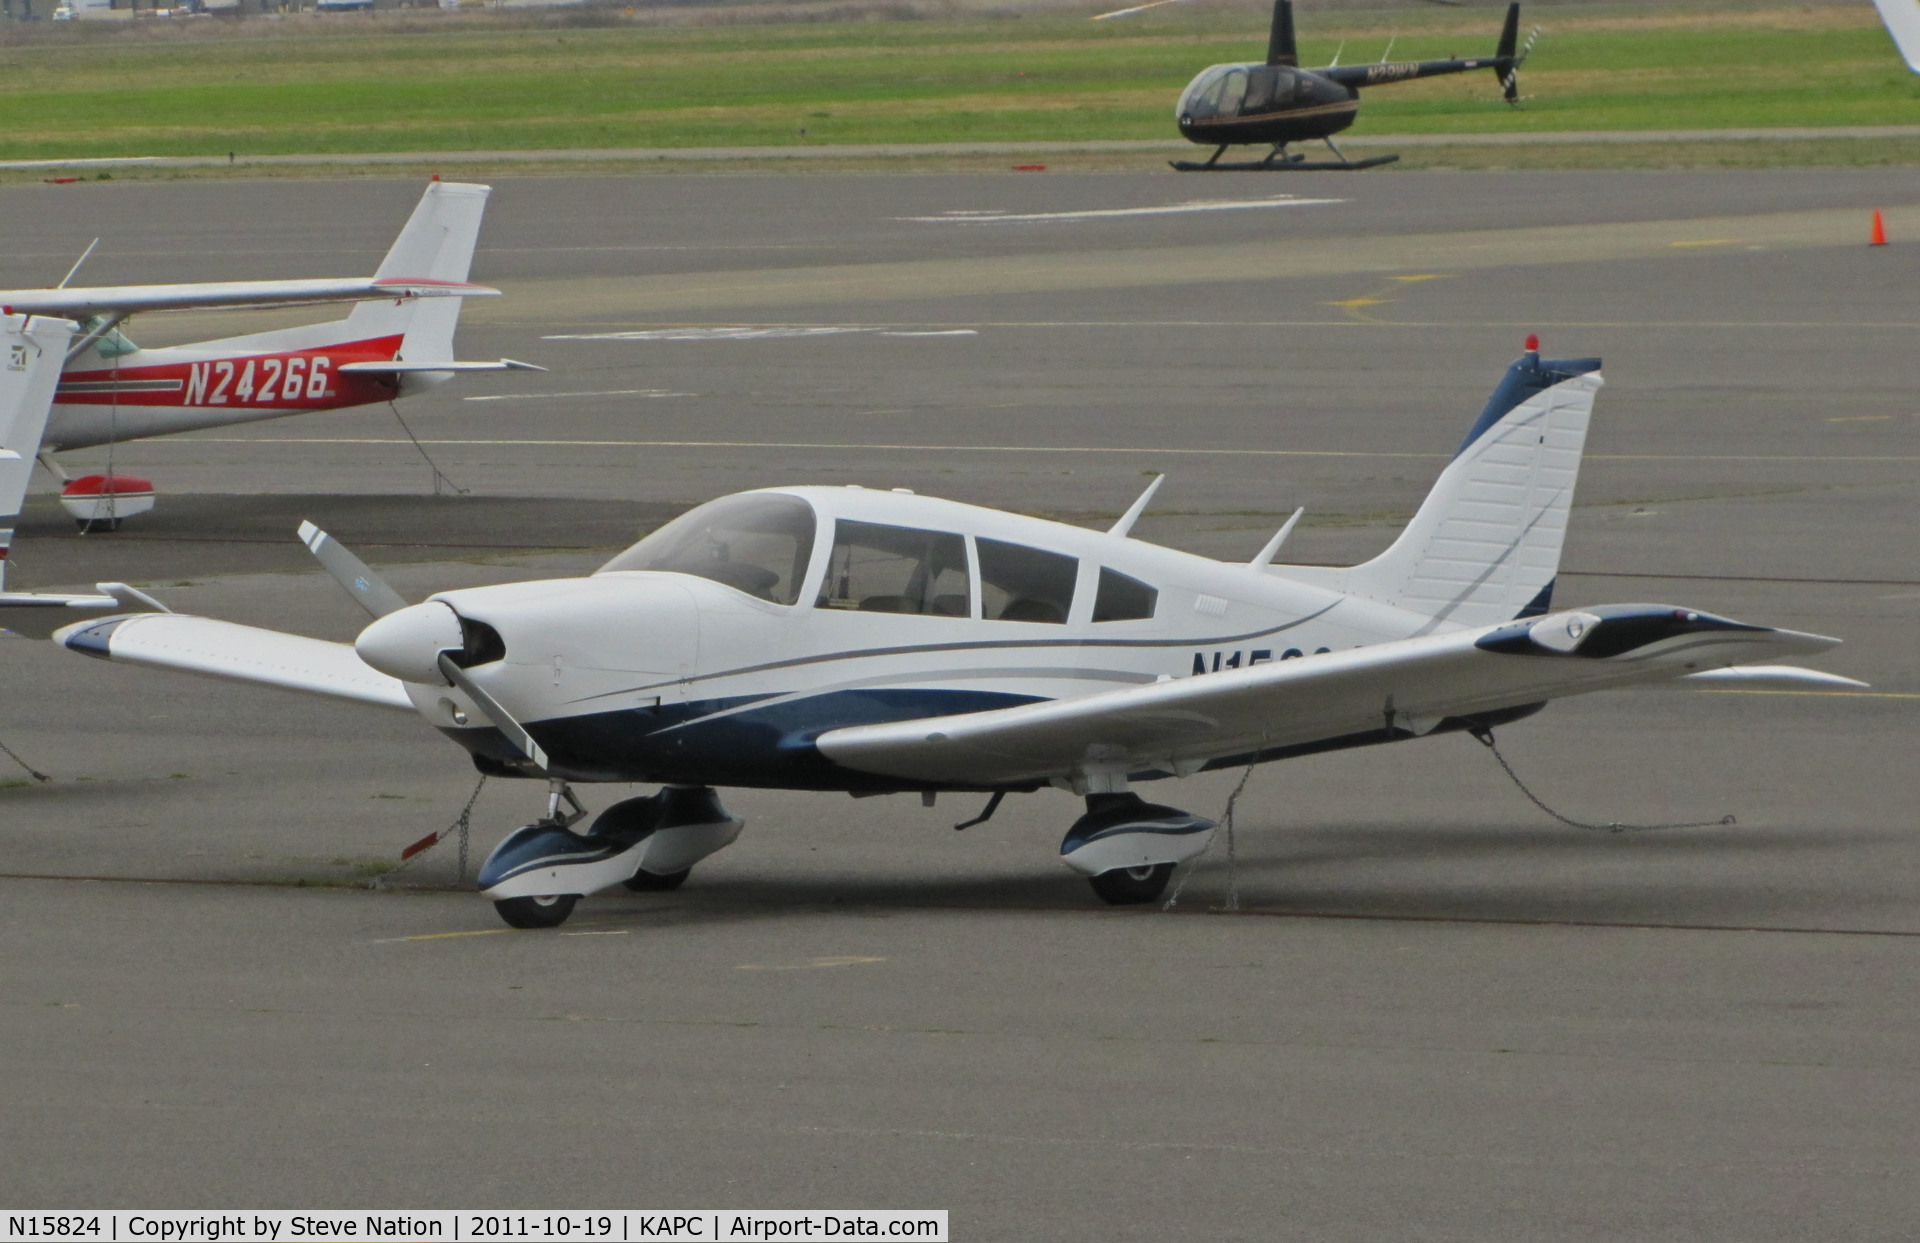 N15824, 1972 Piper PA-28-180 C/N 28-7305156, McCrane Inc (Fairfield, CA) 1972 Piper PA-28-180 in new blue/white cs @ Napa, CA